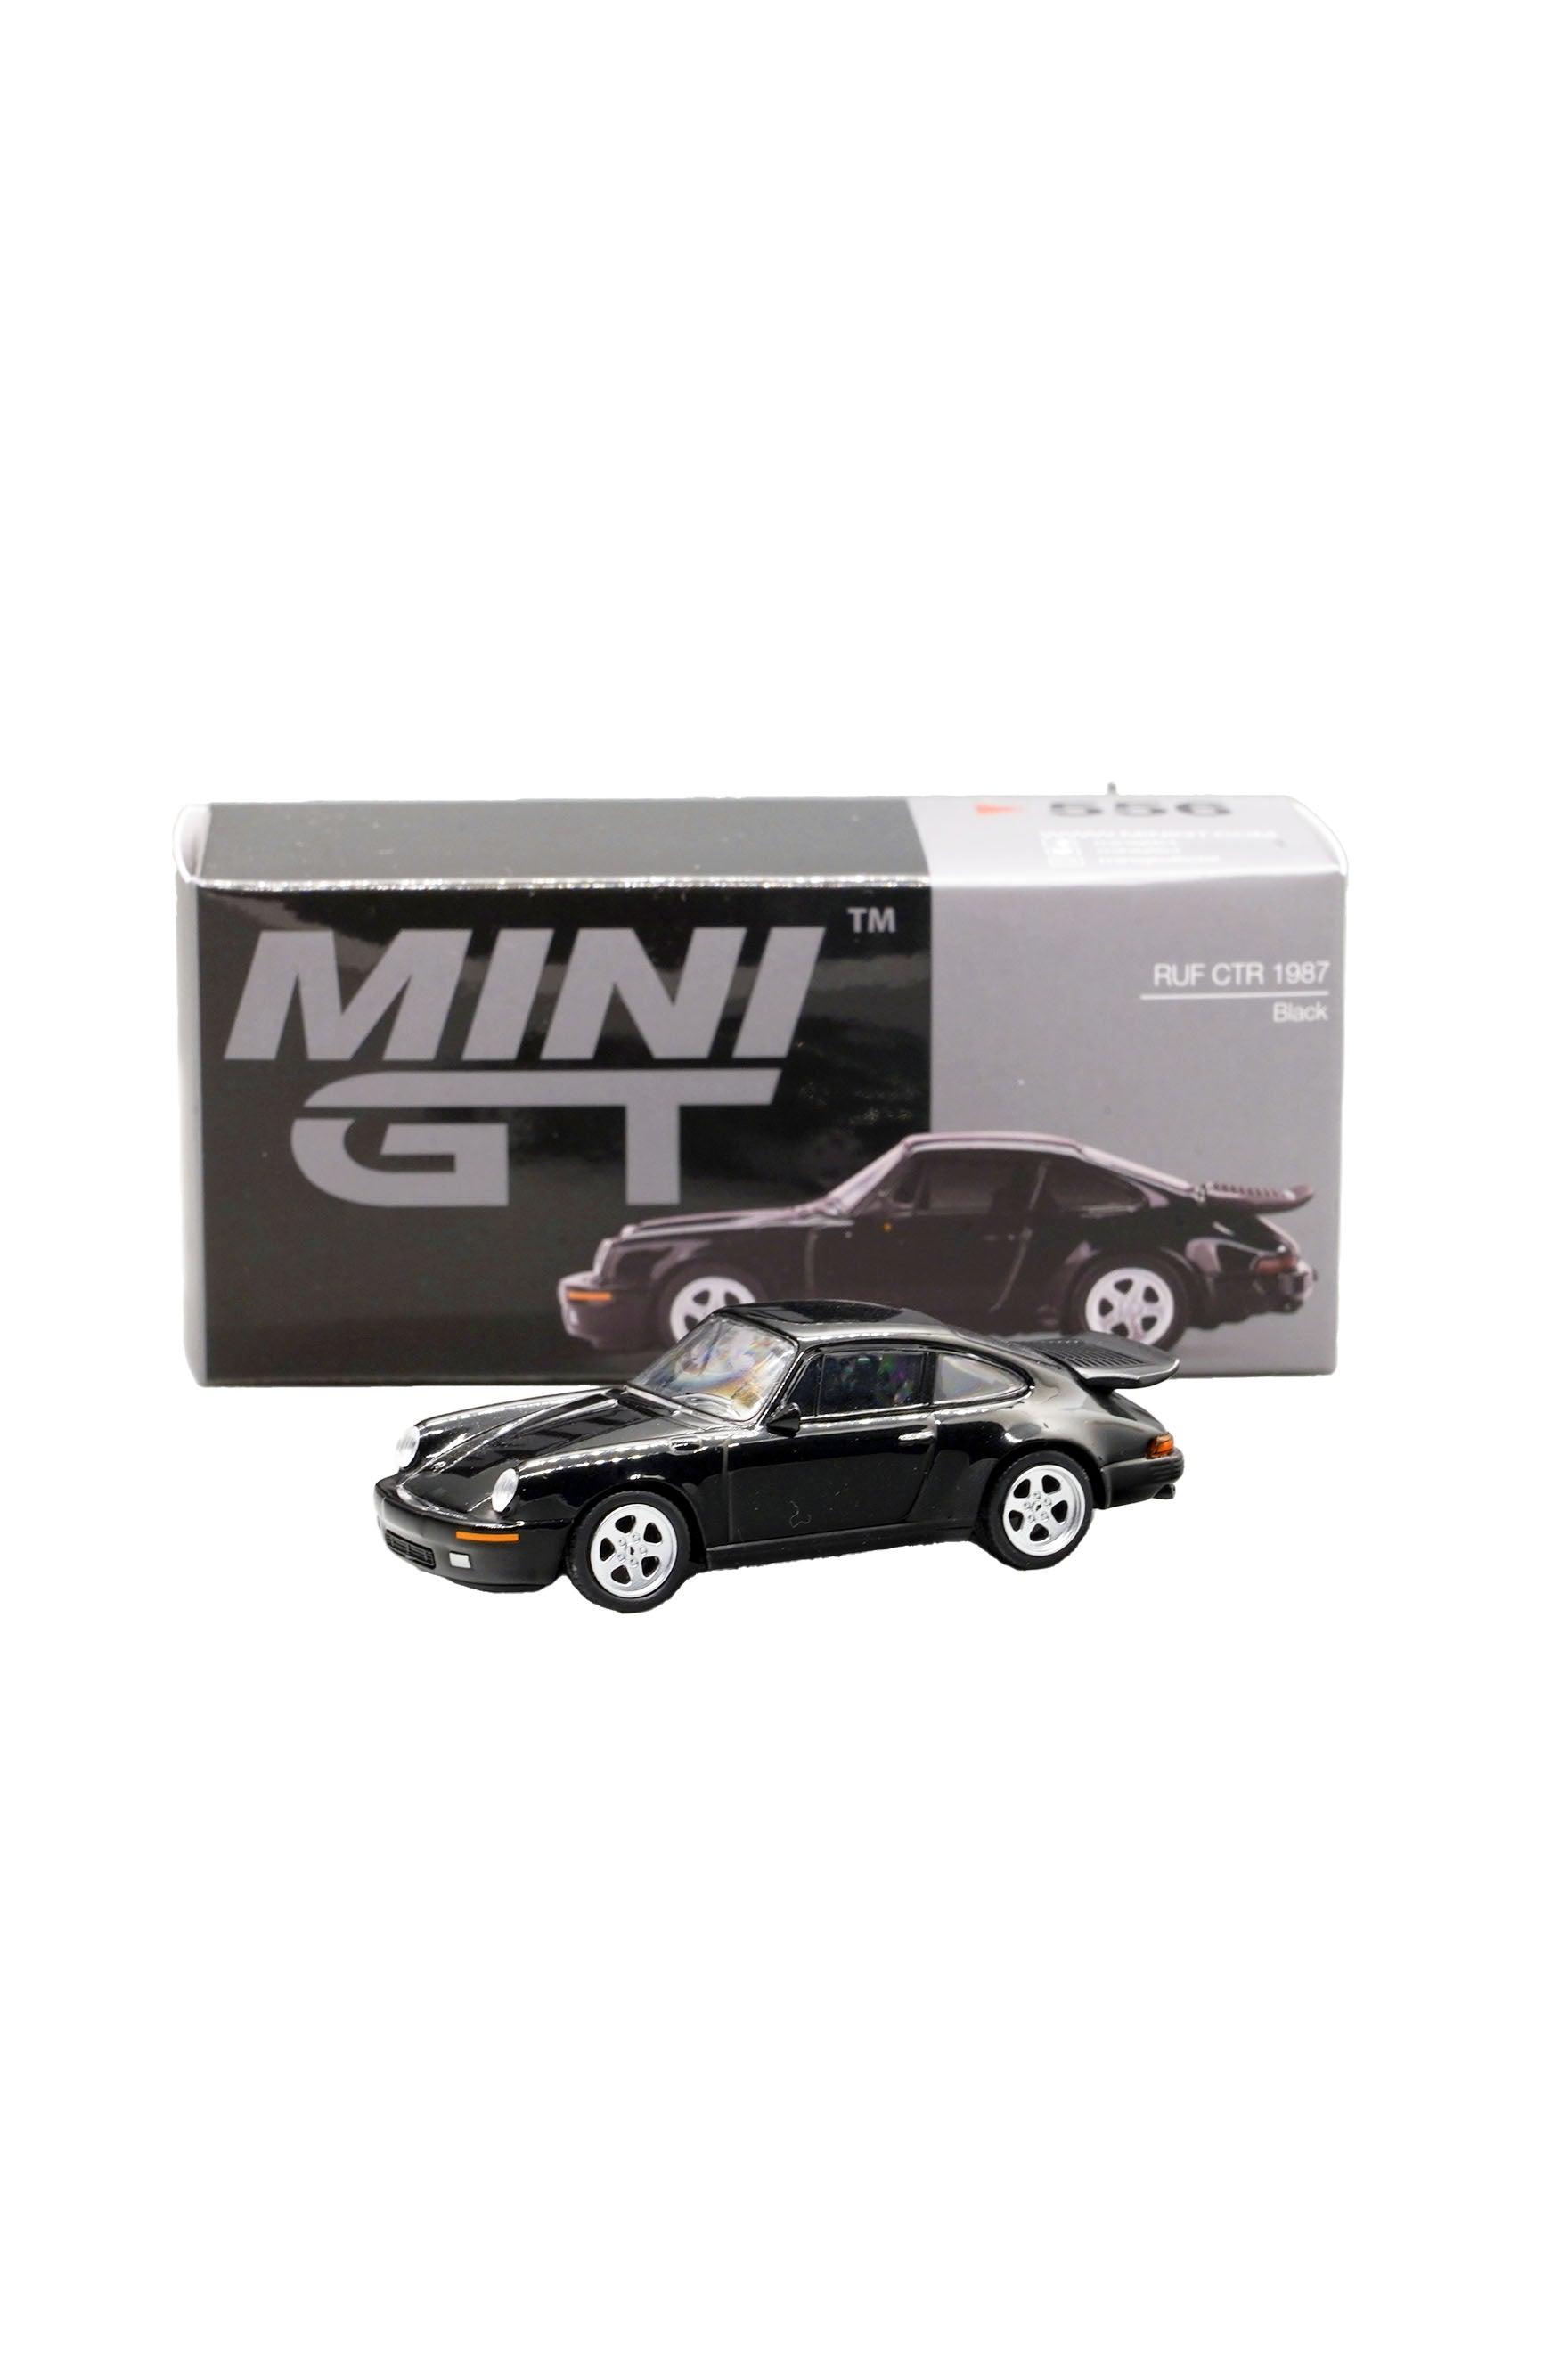 Mini GT 1:64 RUF CTR 1987 – Black - EverydayThreads